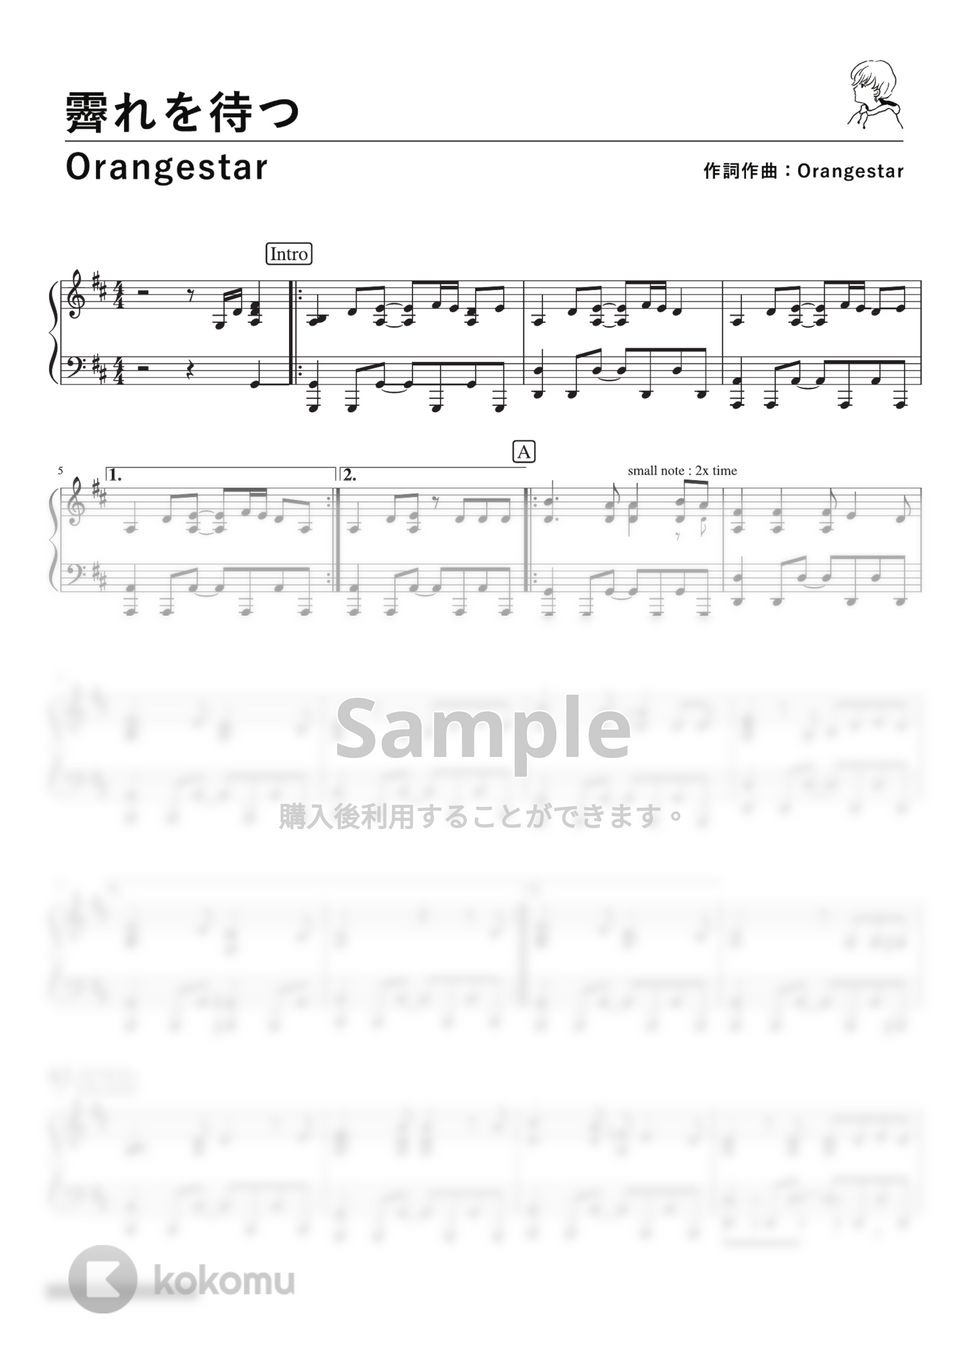 Orangestar - 霽れを待つ (PianoSolo) by 深根 / Fukane